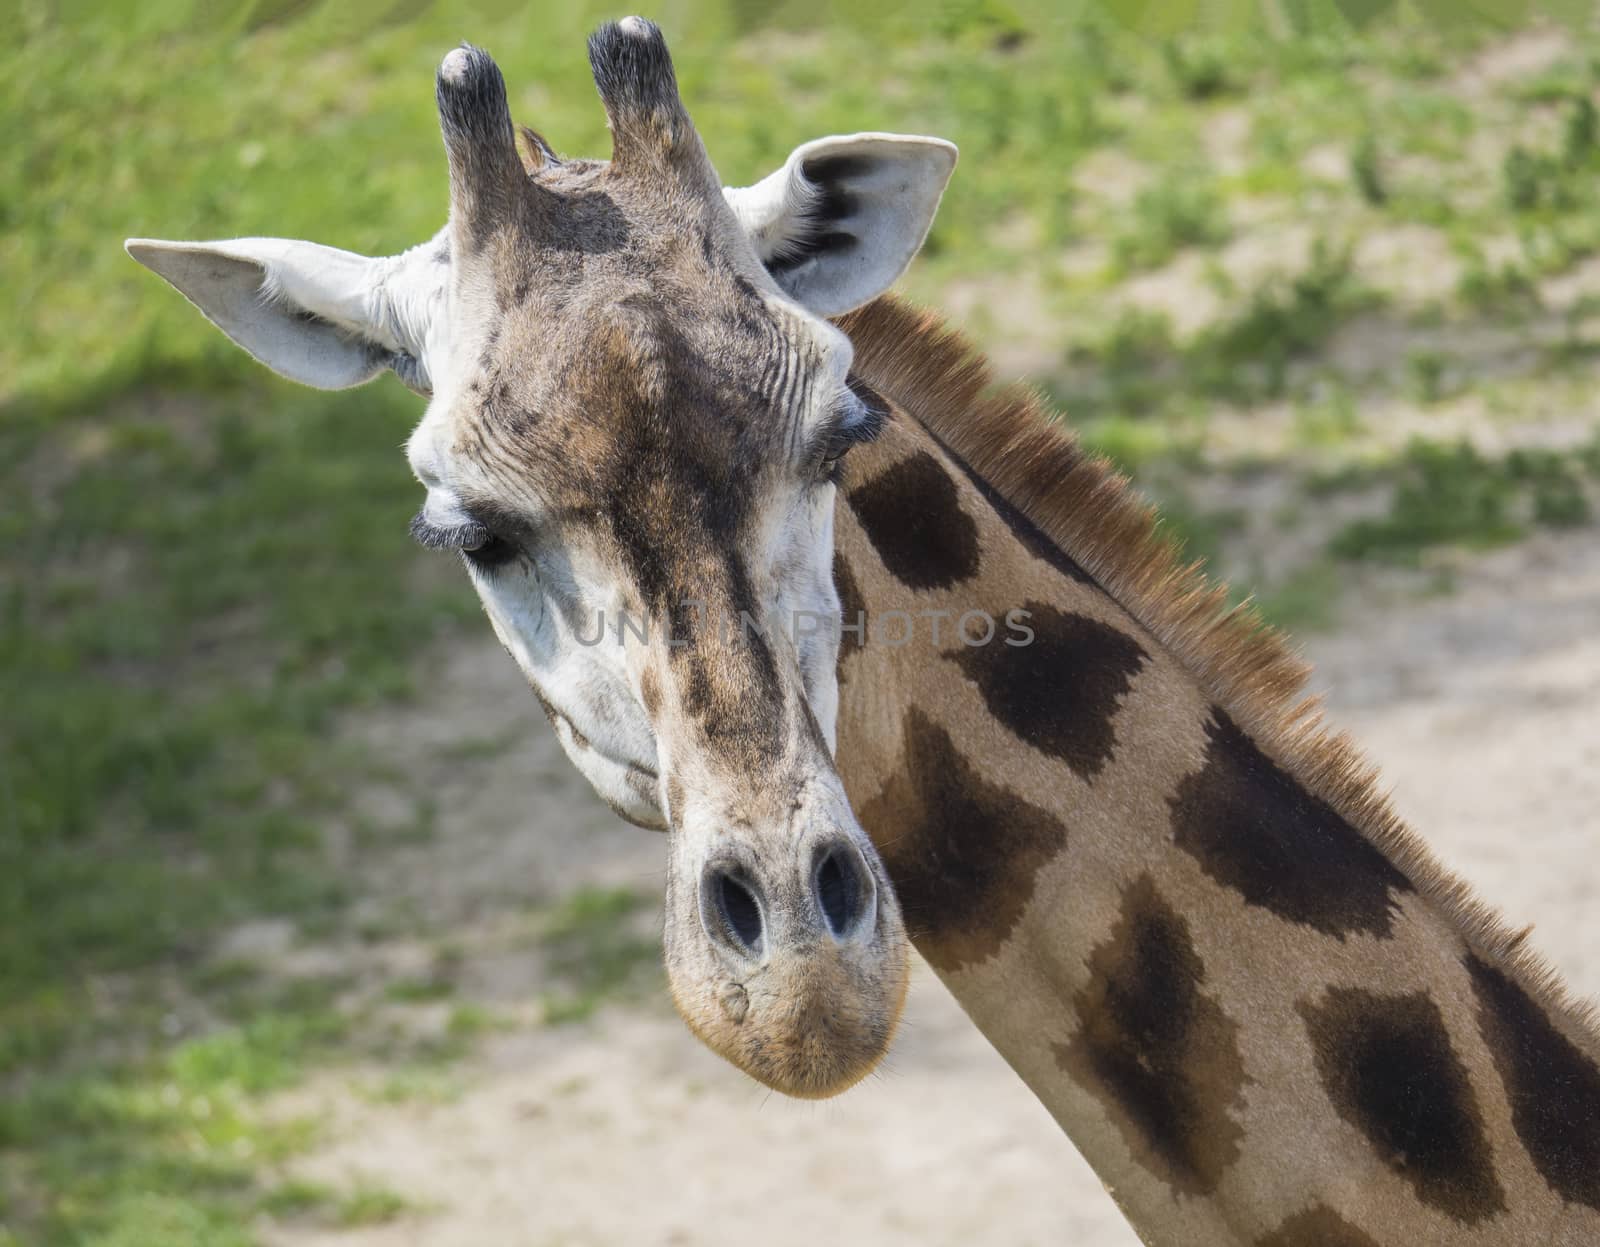 Close up portrait of giraffe head, Giraffa camelopardalis camelopardalis Linnaeus, frontal view, green bokeh background by Henkeova